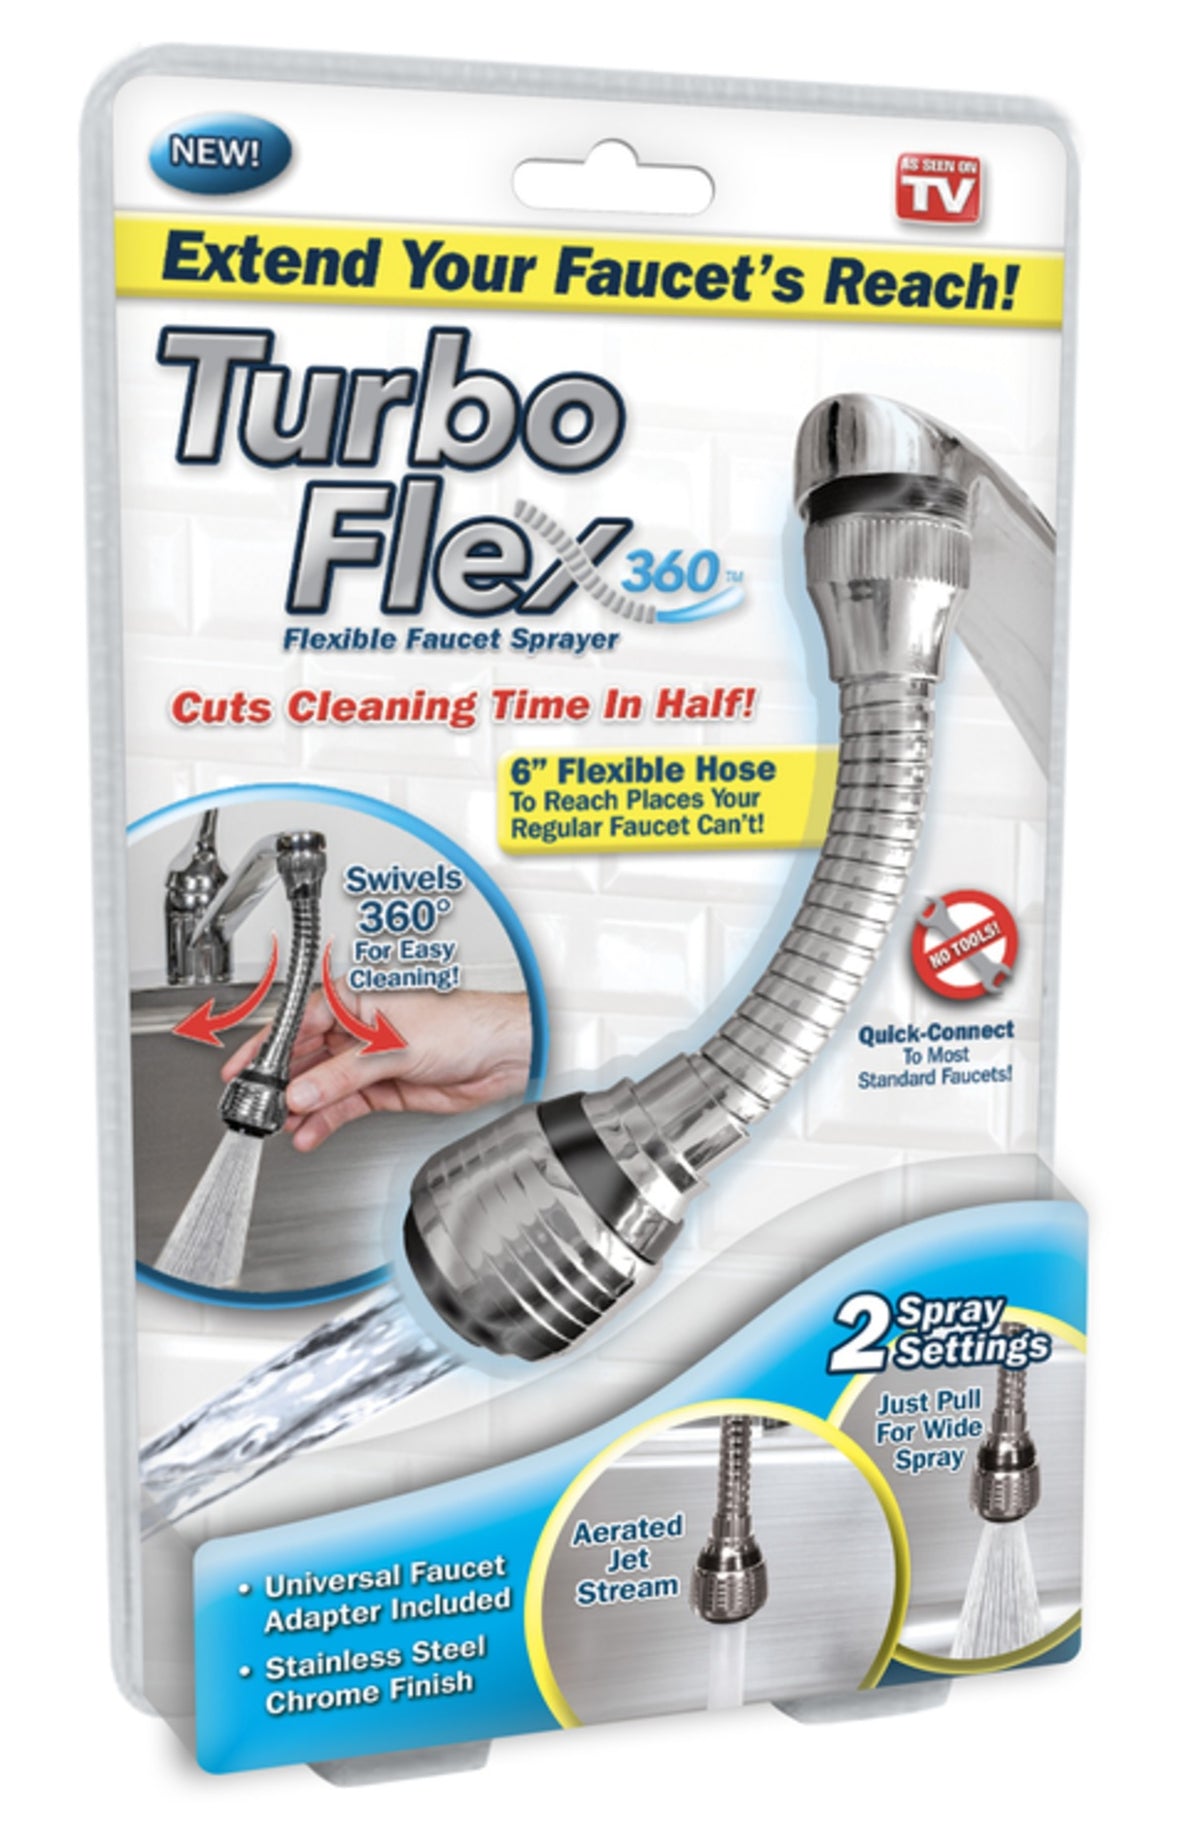 Turbo Flex 360 TF-CD12/6 As Seen On TV Flexible Faucet Sprayer, Chrome